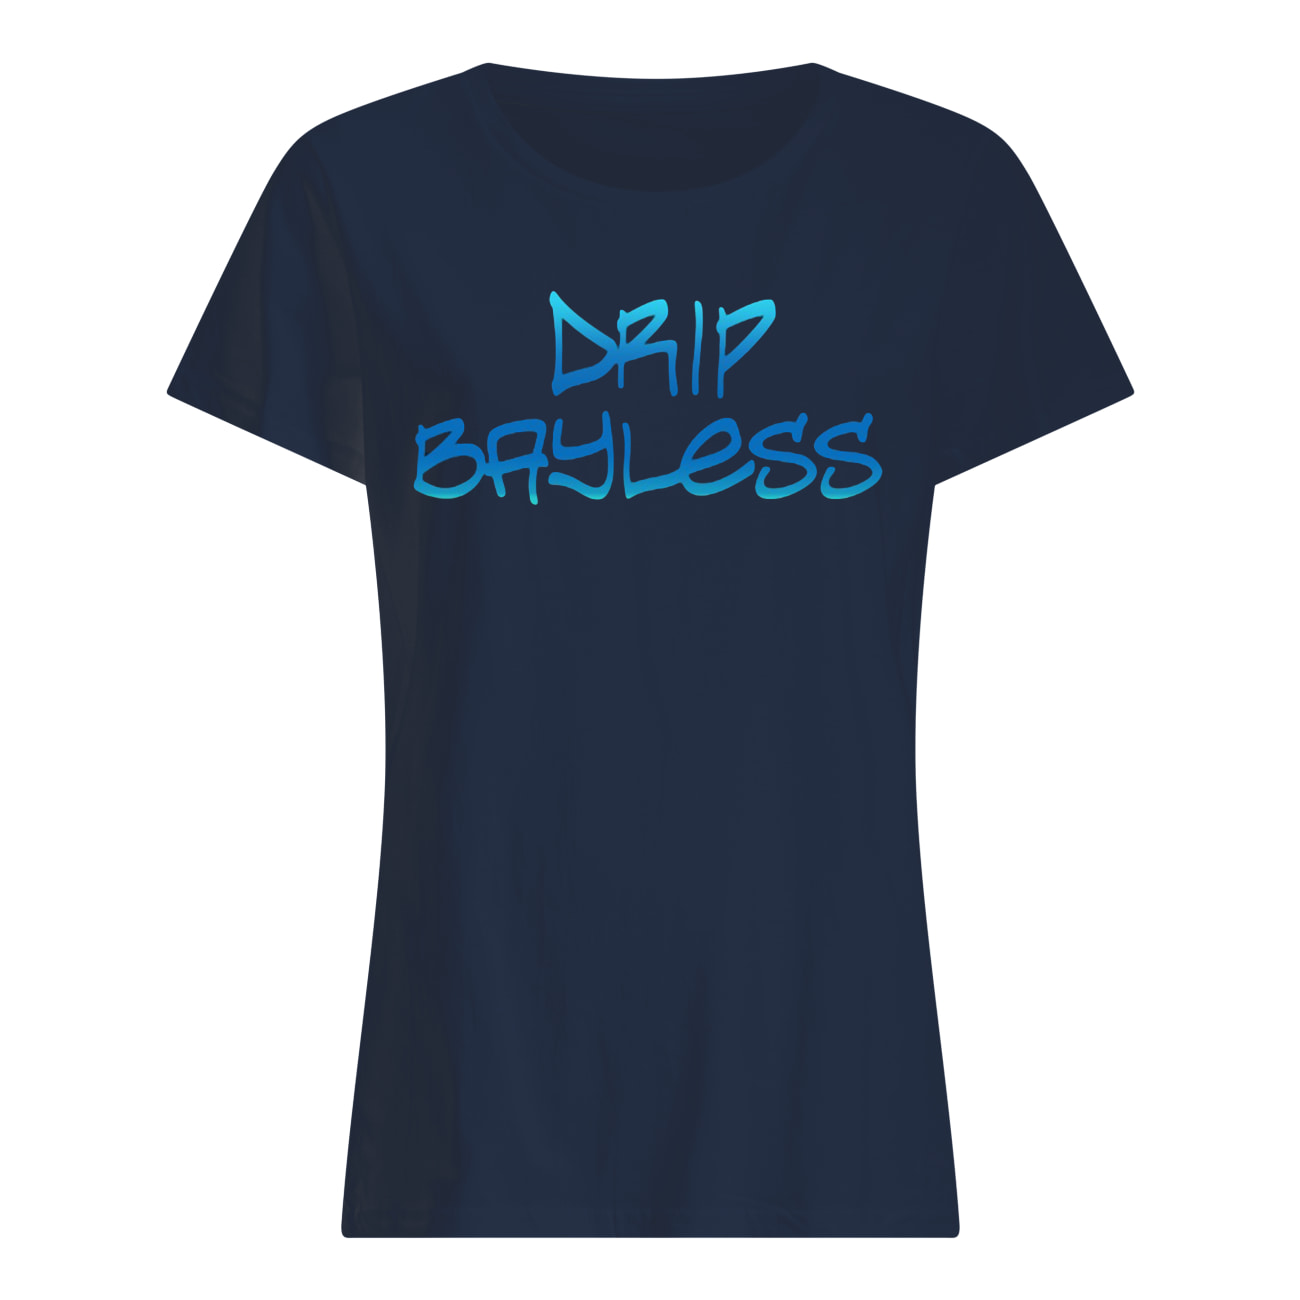 Snoop drip bayless womens shirt